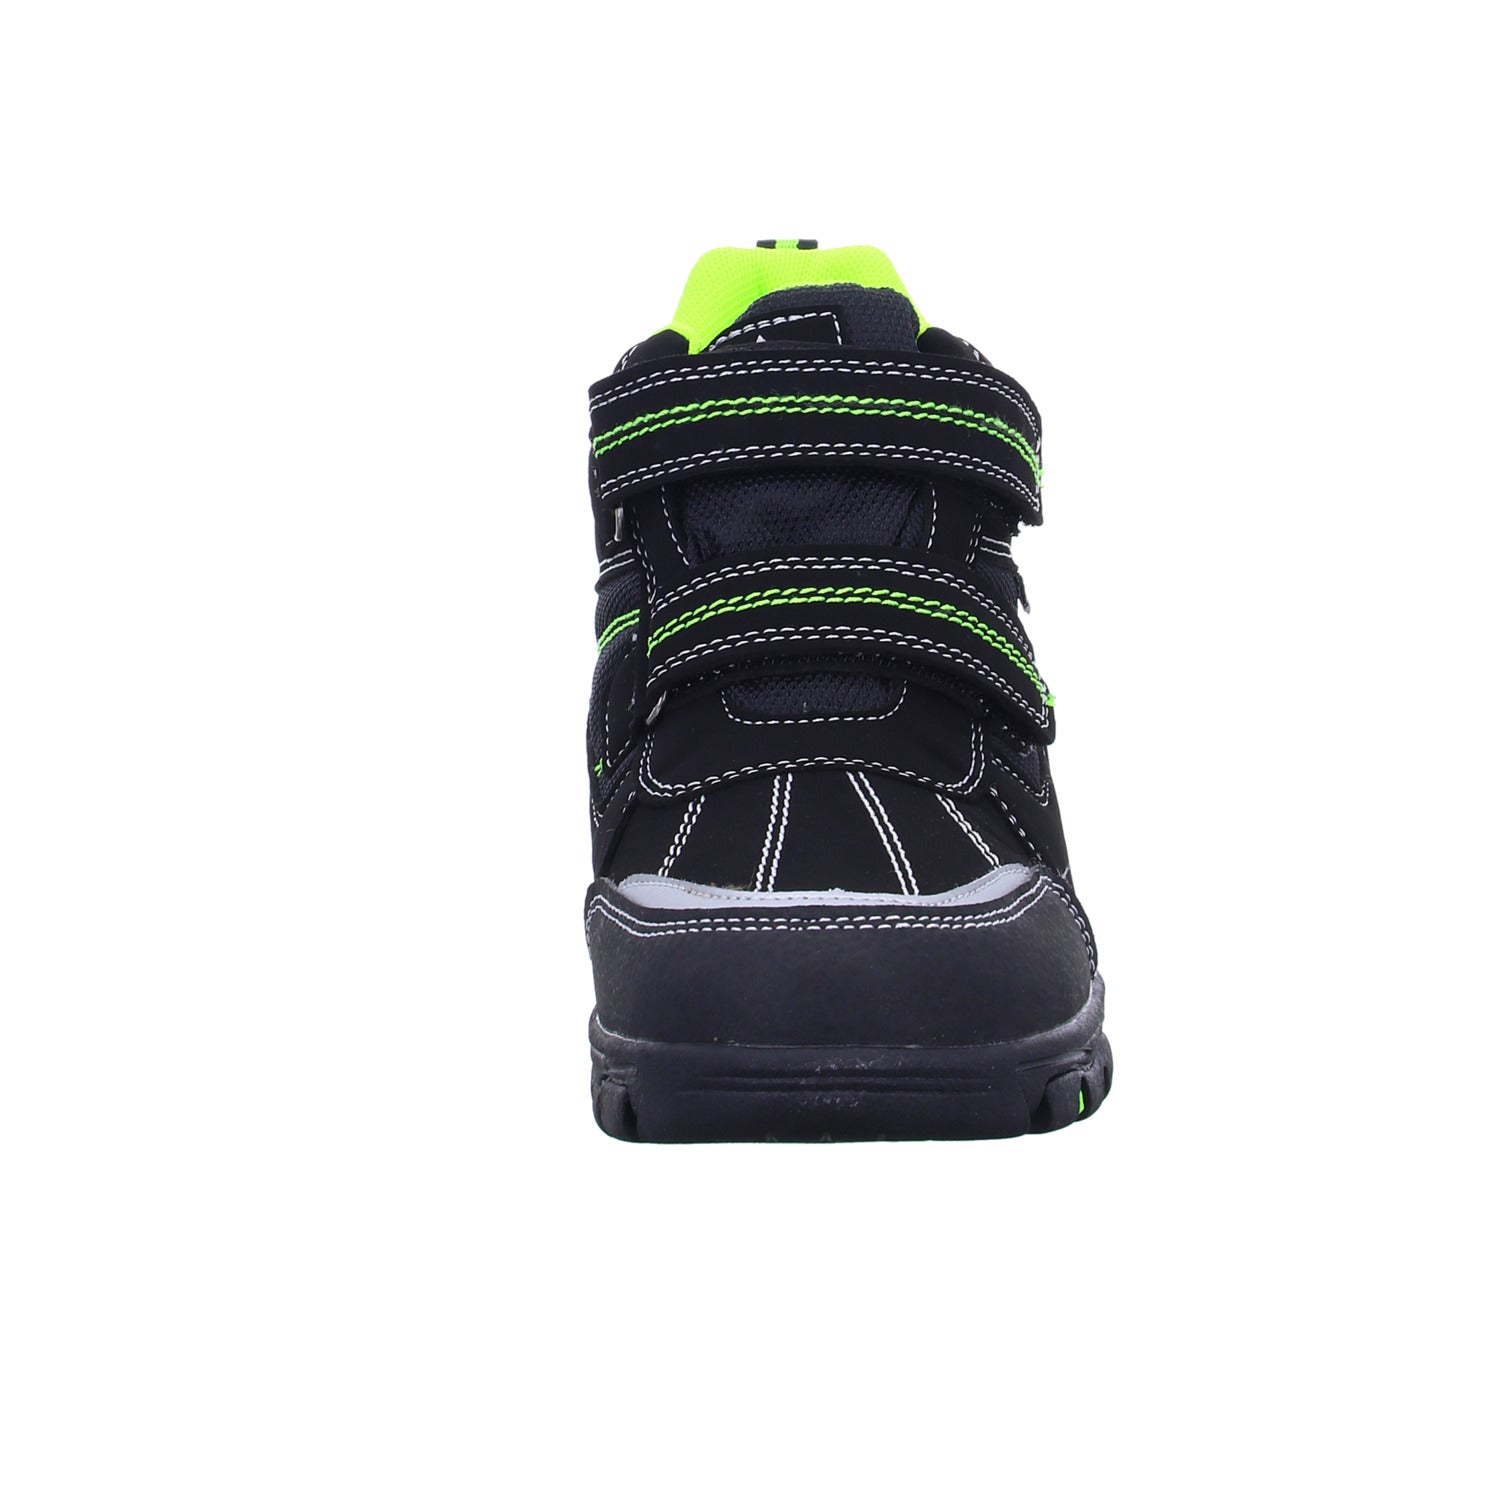 Sneakers Allwetterstiefel Warmfutter mit Funktionsmembran (wasserabweisend/wasserdicht)